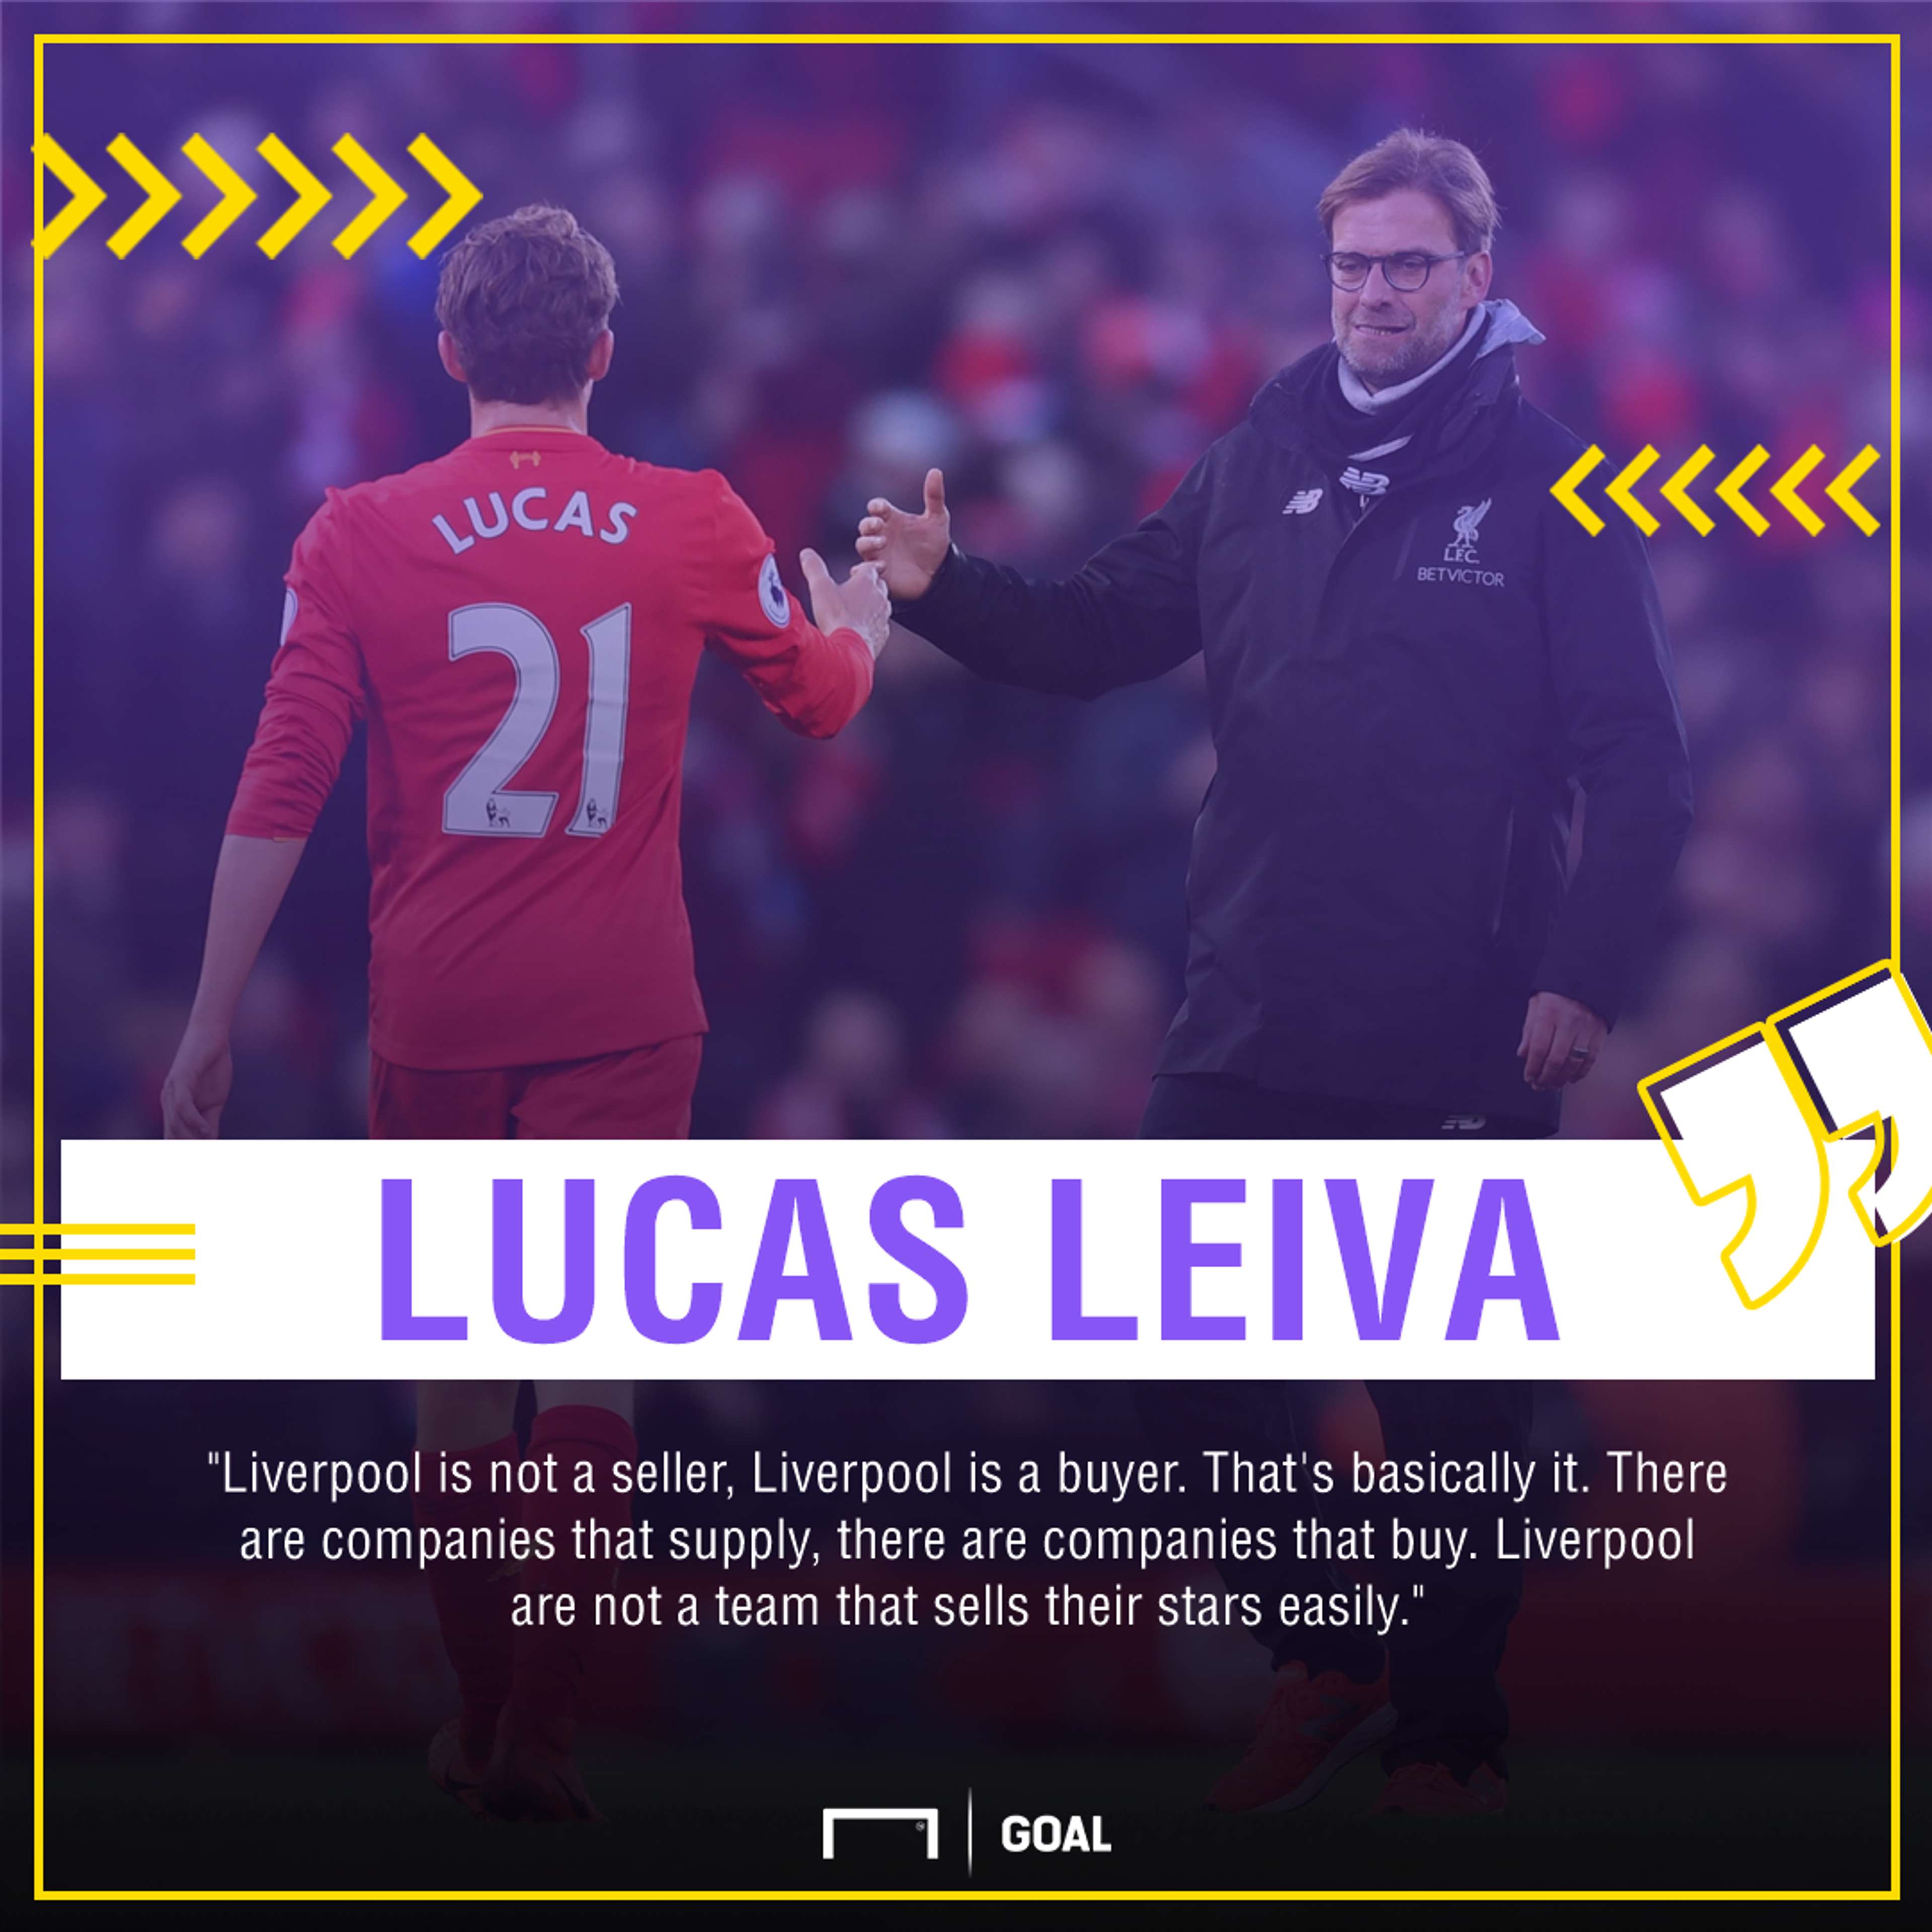 Lucas Leiva Liverpool buyer not seller